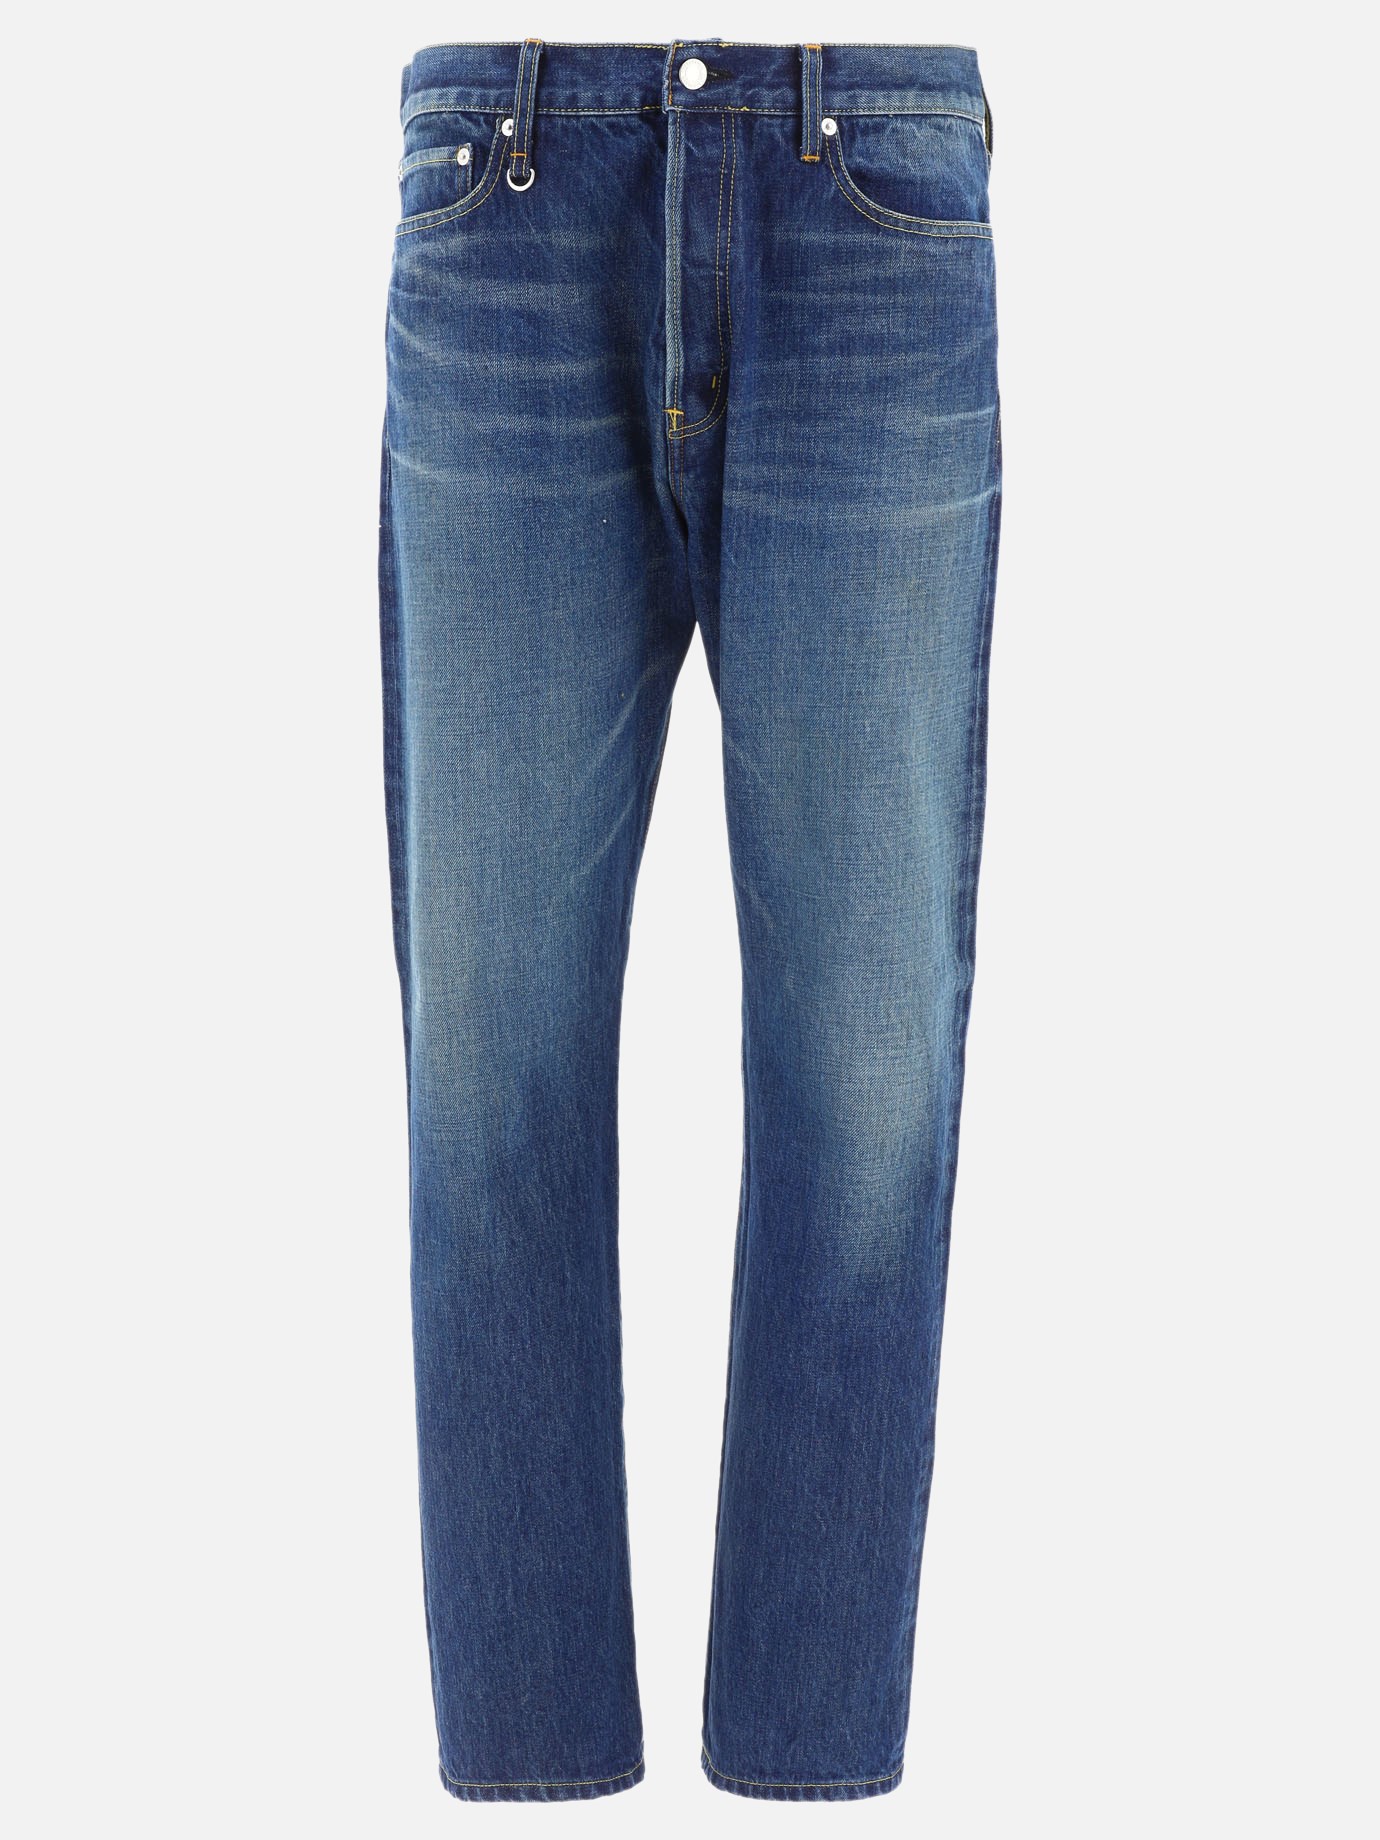 Jeans con zip posteriorieby Undercover - 3